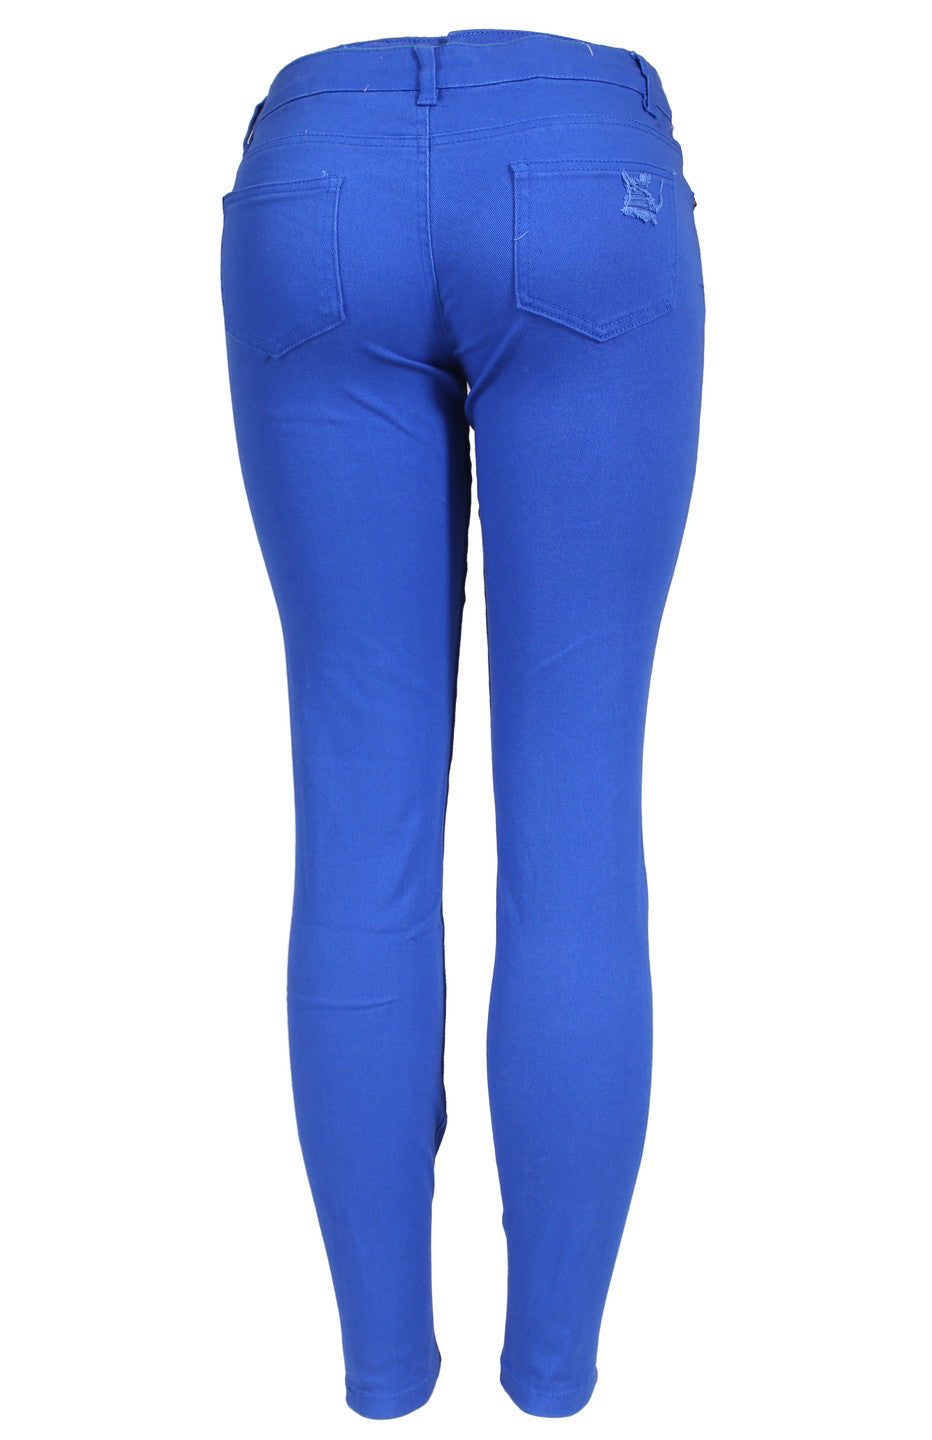 Honeylove EverReady Pant  Clothes design, Blue fashion, Women jeans